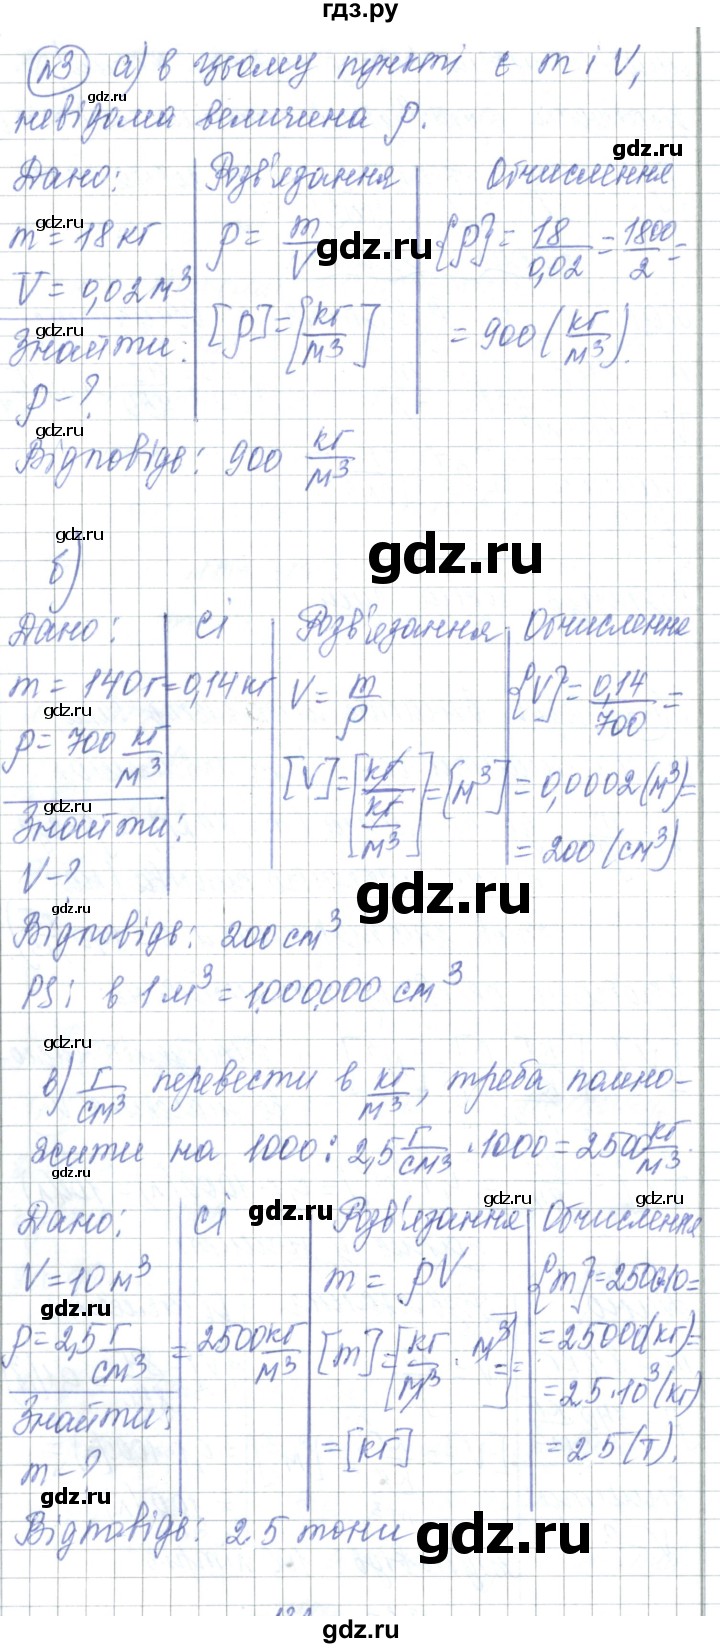 ГДЗ по физике 7 класс Барьяхтар   страница - 120, Решебник